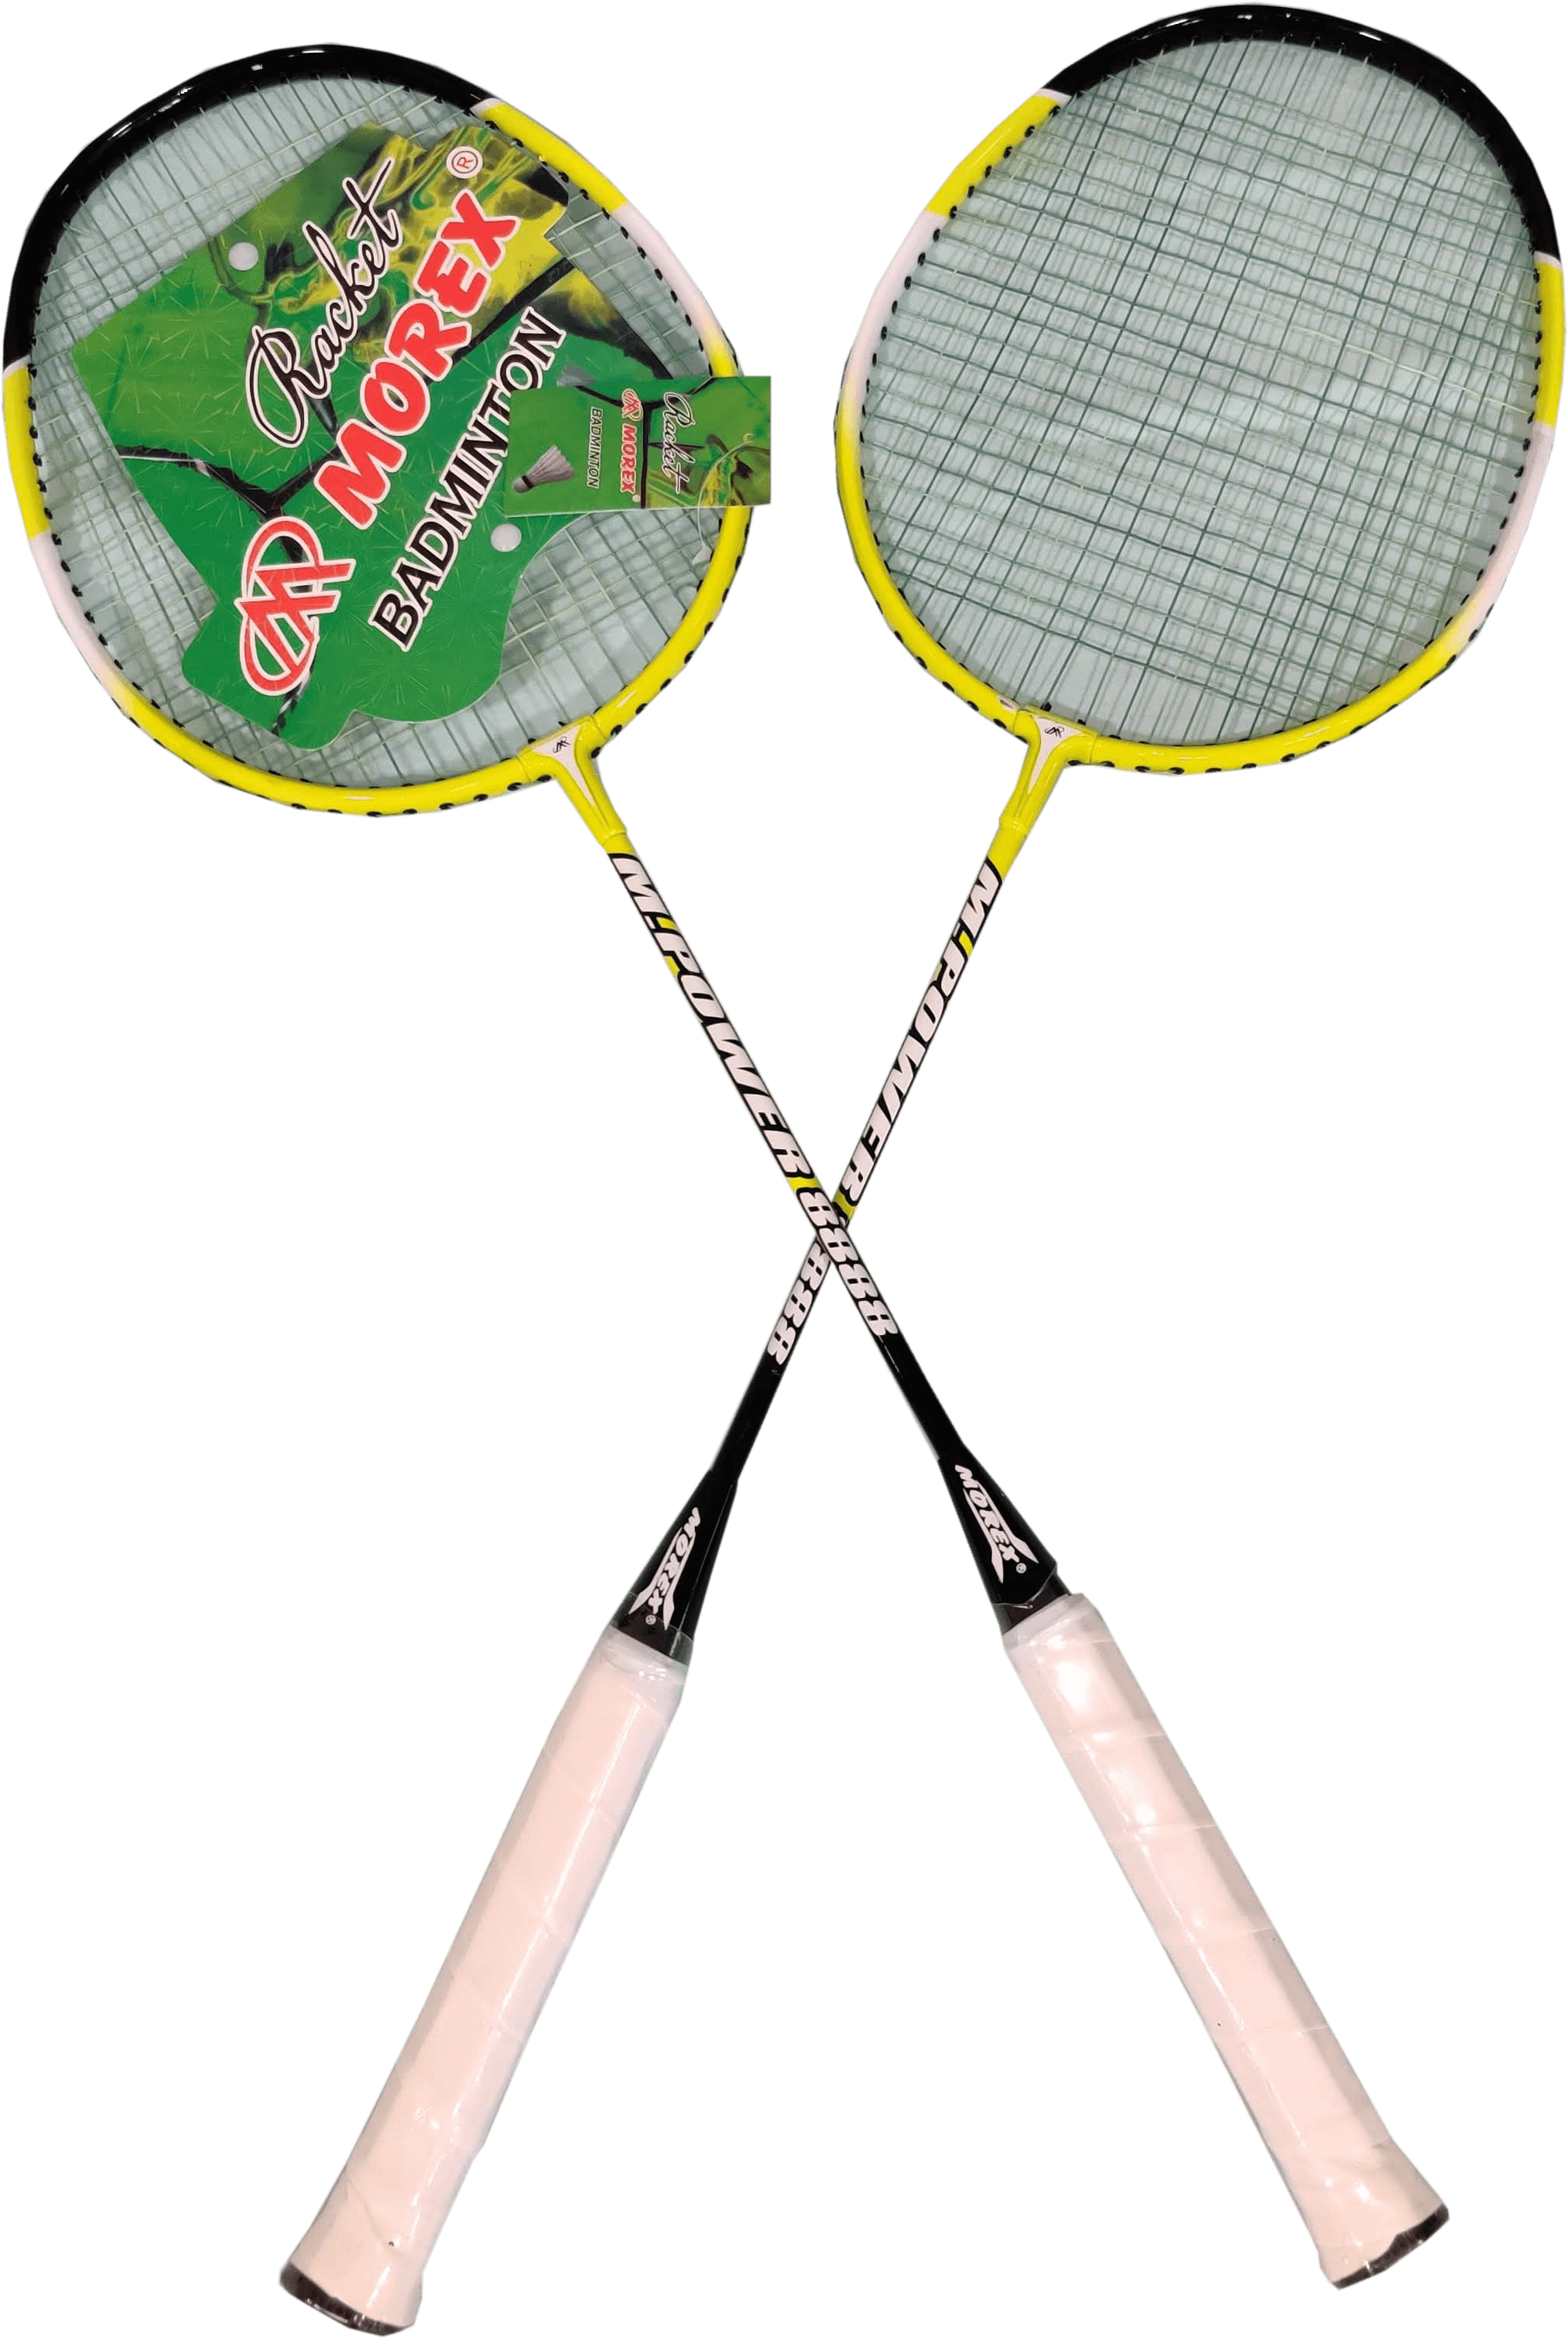 Morex 8888 Badminton Racket